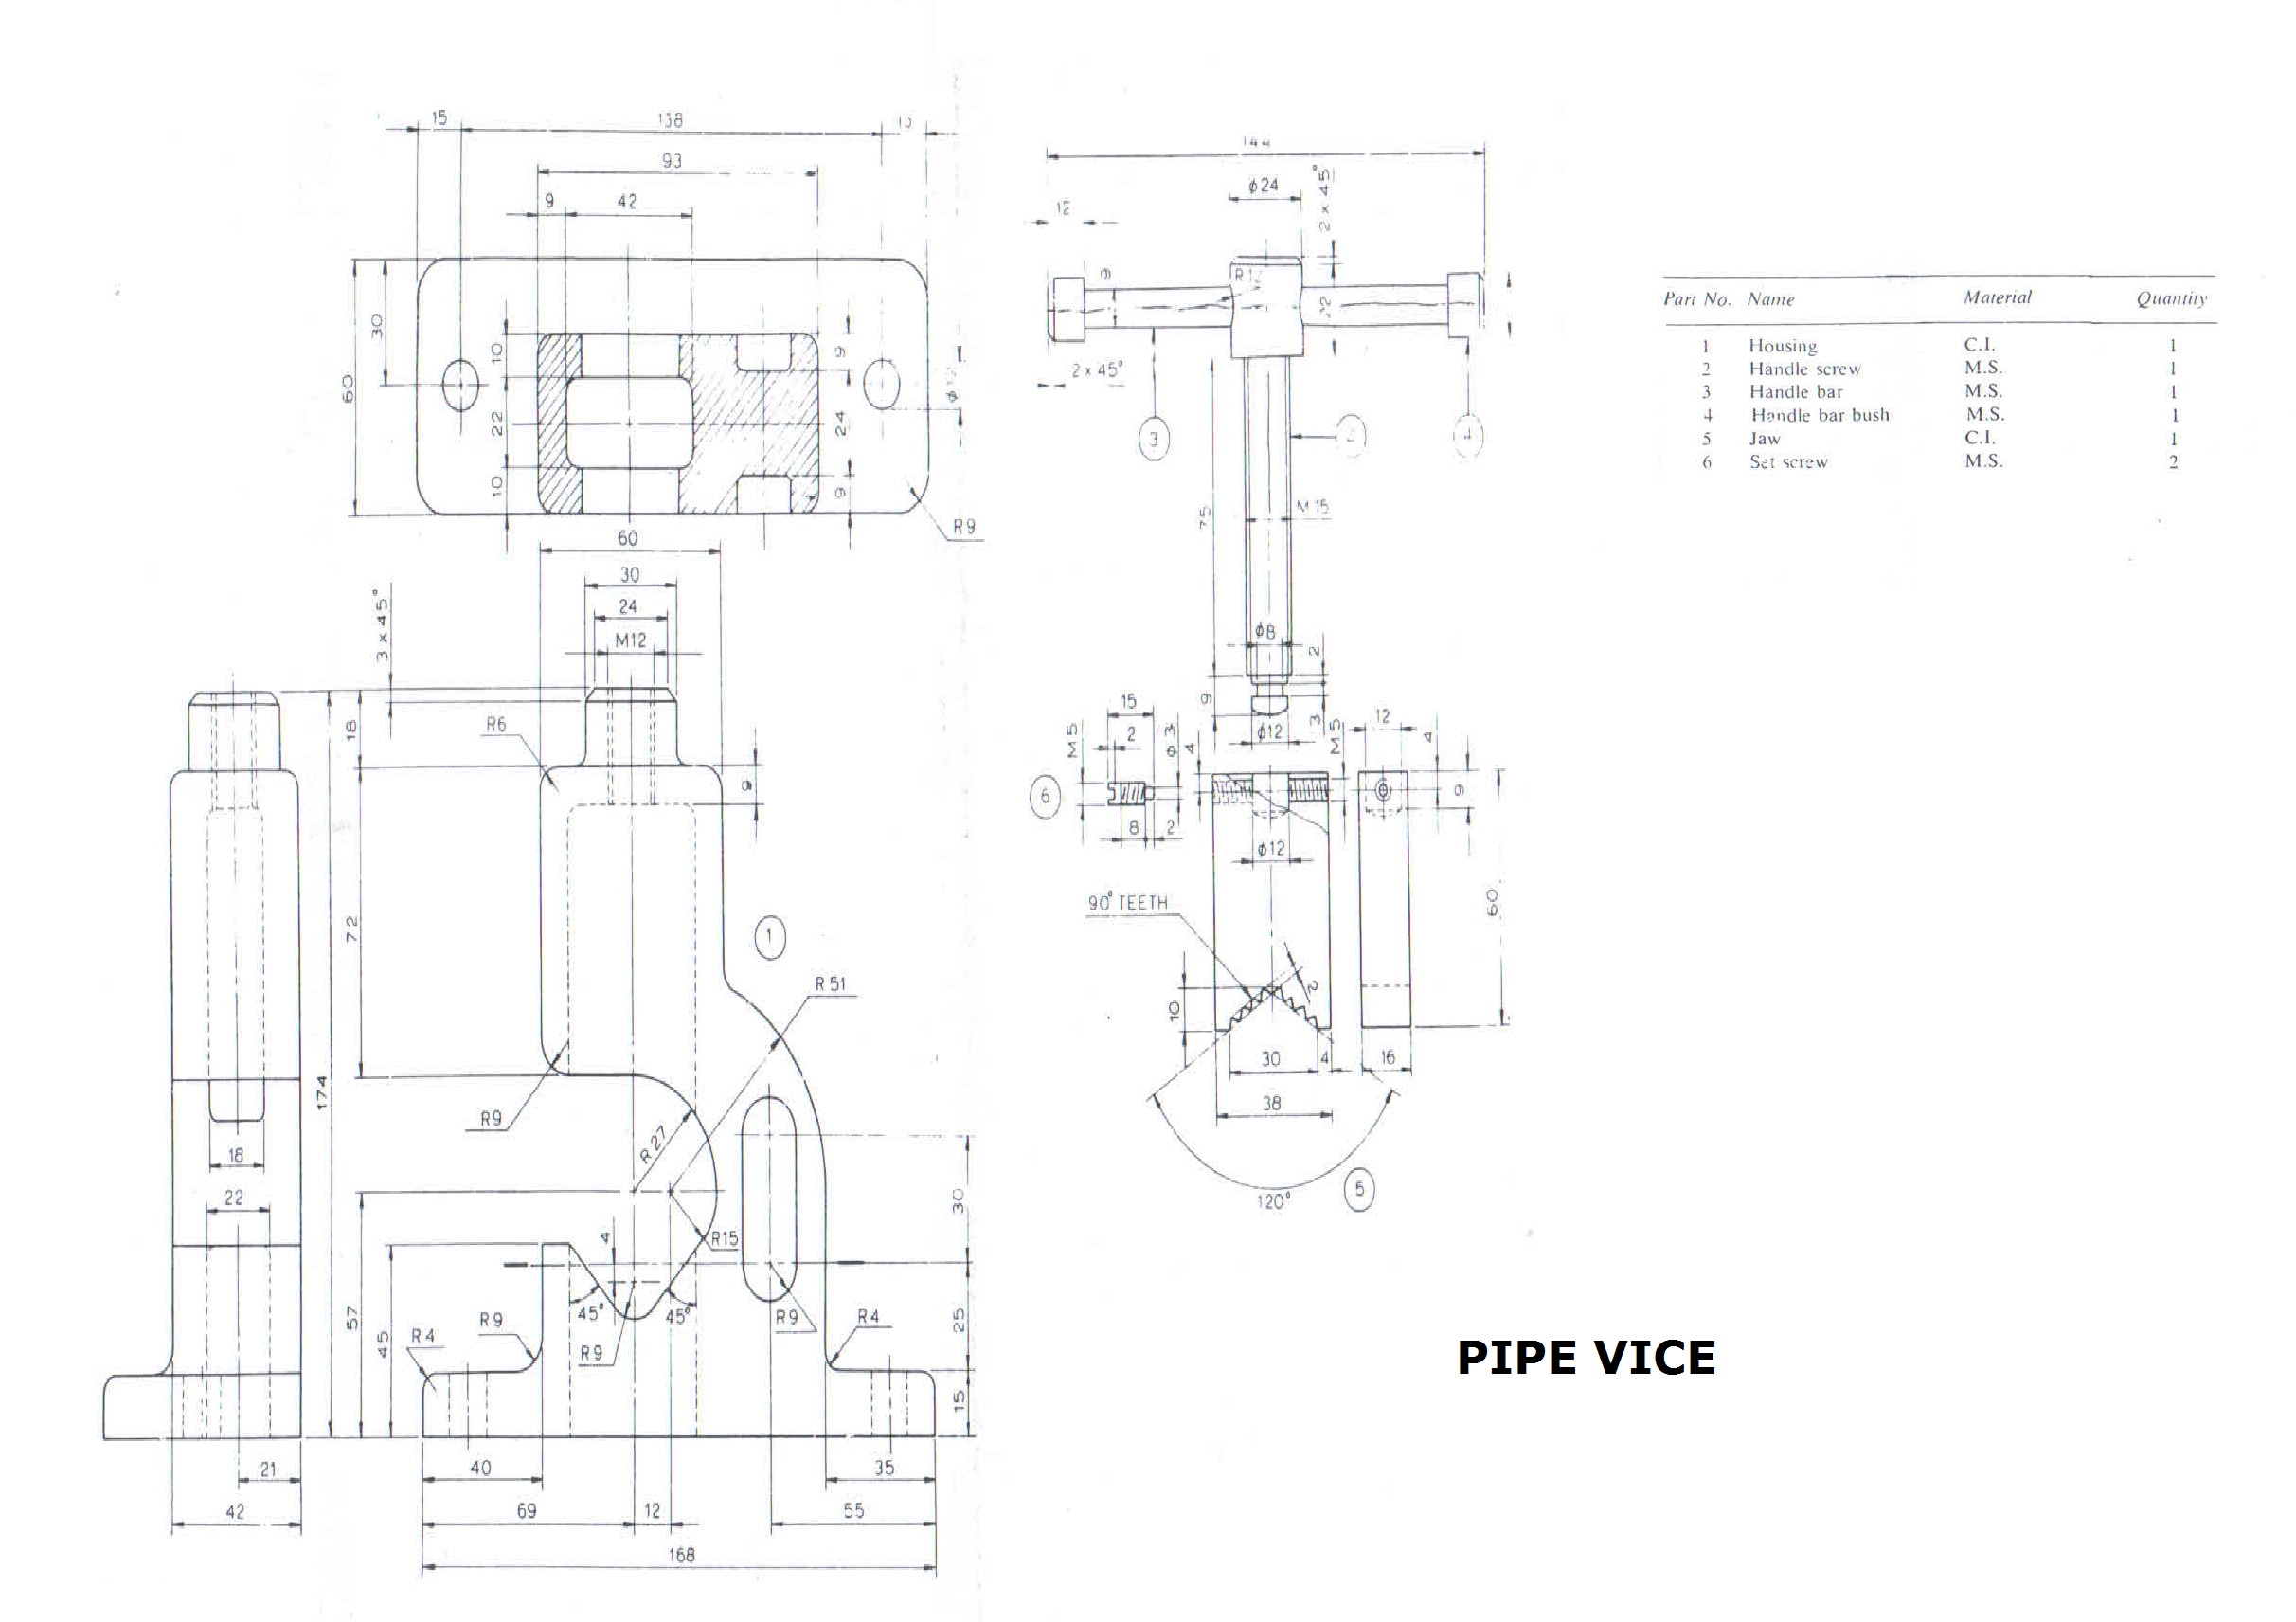 Pipe vice design-PIPE VICE.jpg